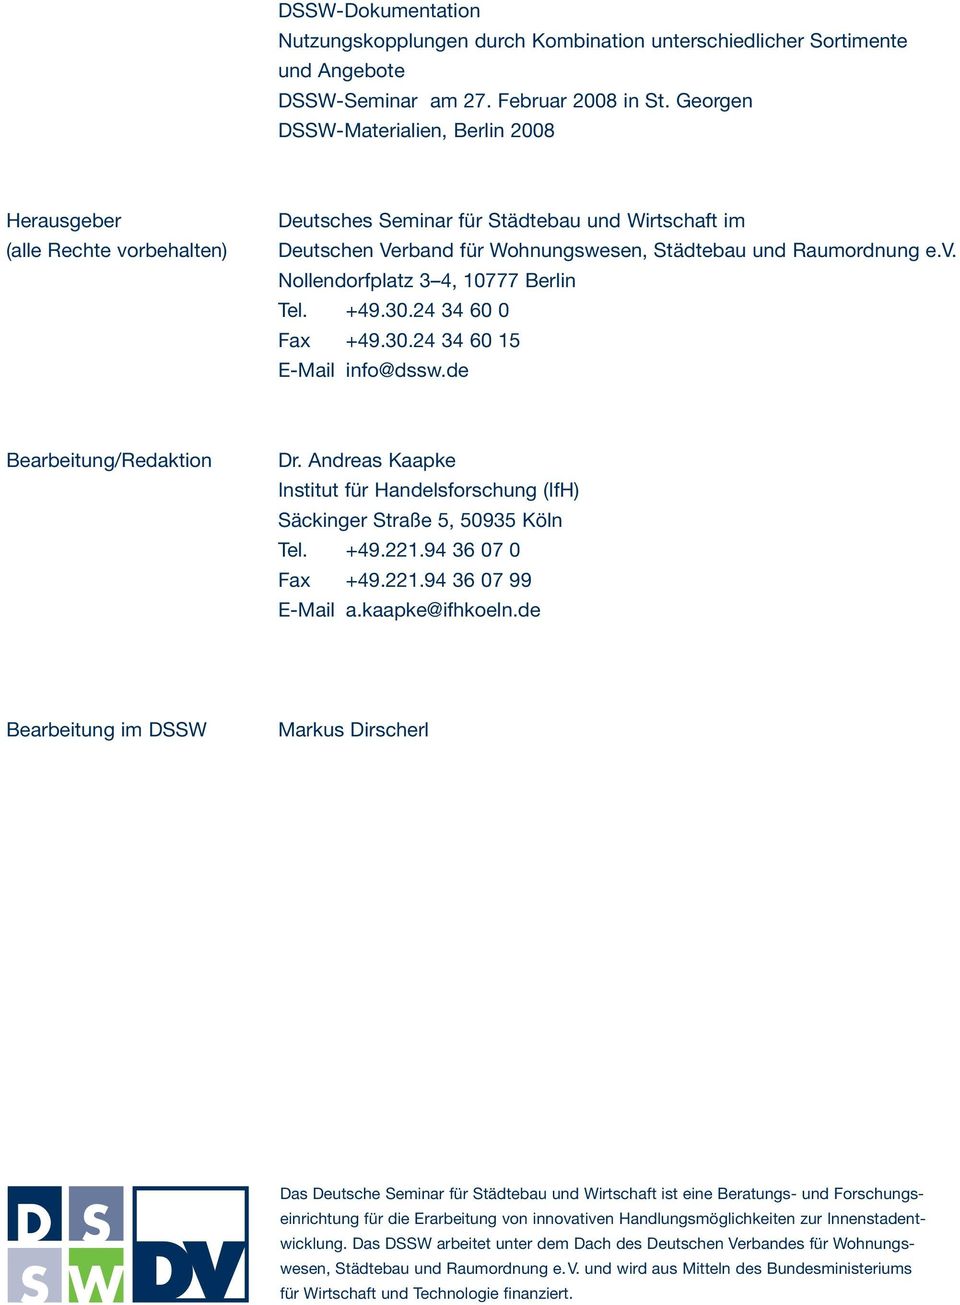 +49.30.24 34 60 0 Fax +49.30.24 34 60 15 E-Mail info@dssw.de Bearbeitung/Redaktion Dr. Andreas Kaapke Institut für Handelsforschung (IfH) Säckinger Straße 5, 50935 Köln Tel. +49.221.